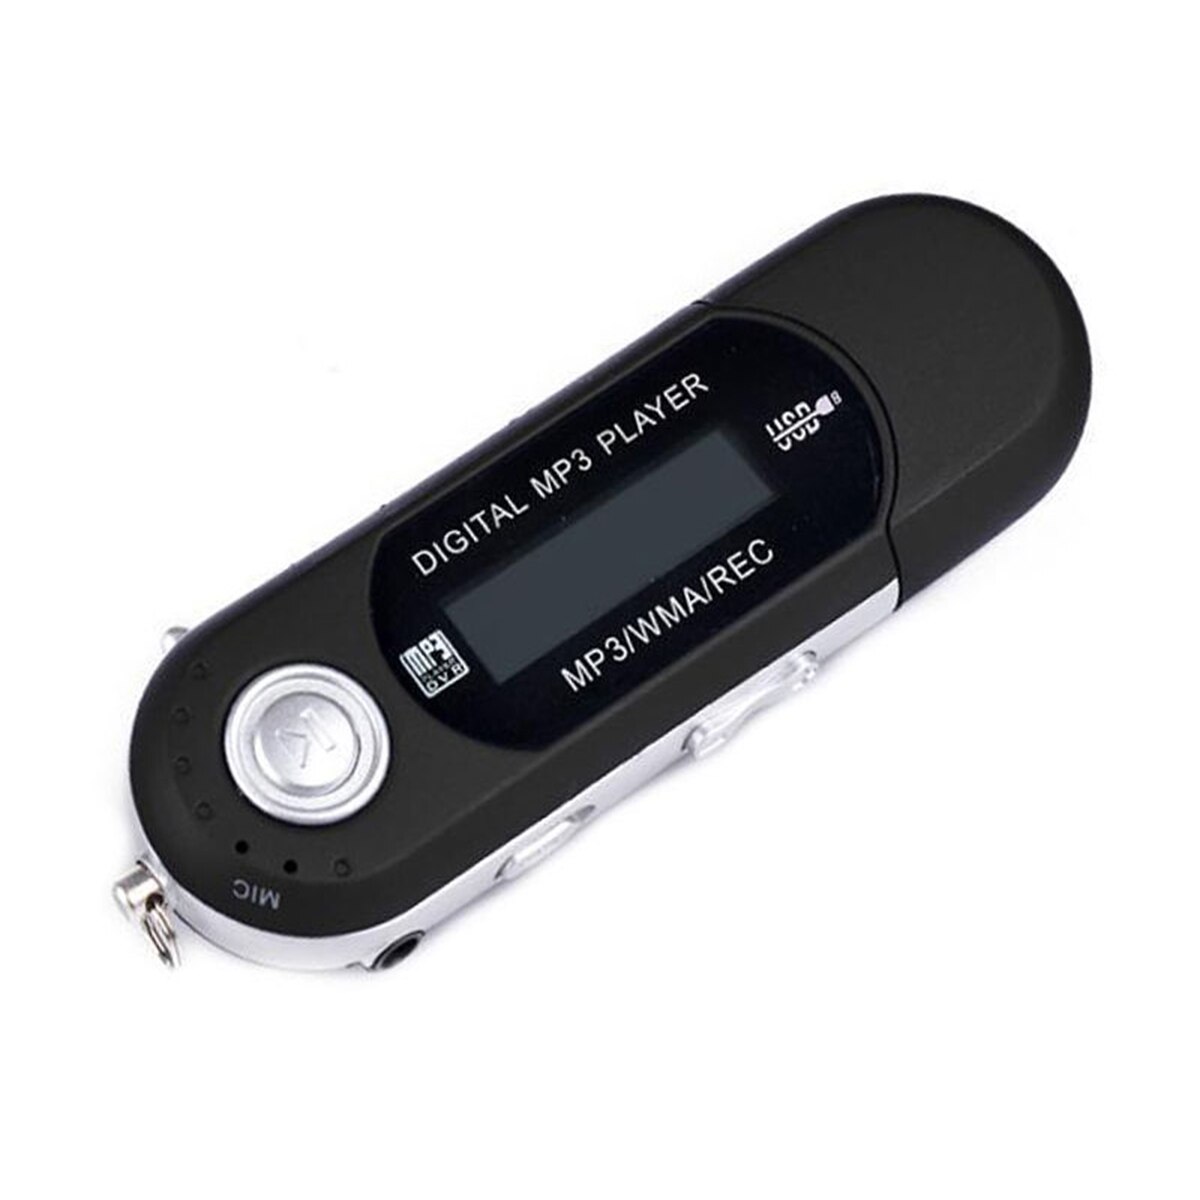 SOONHUA Tragbare USB Mp3 Spieler Multifunktions FM Radio MP3 Spieler Mini Digital Musik Spieler Unterstützung 32GB TF Karte LCD bildschirm